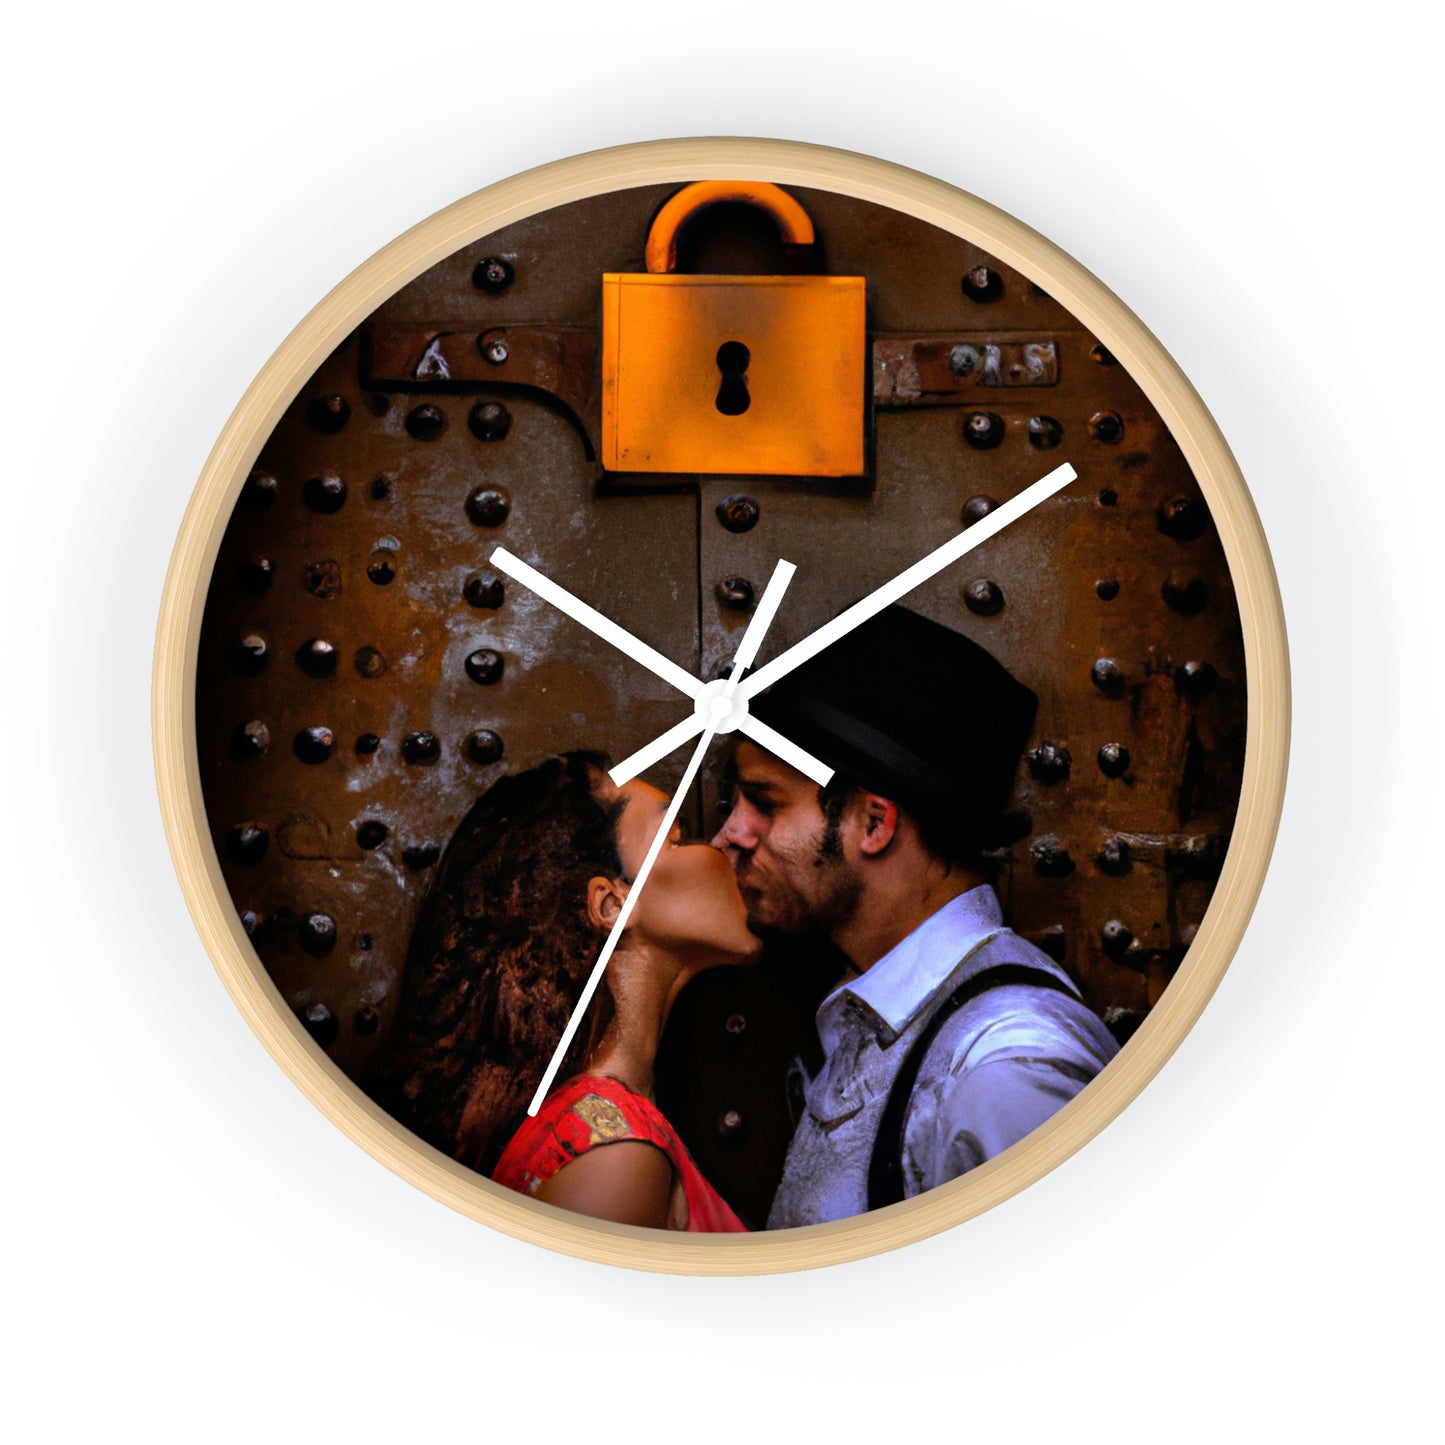 The Kissing Portal - The Alien Wall Clock